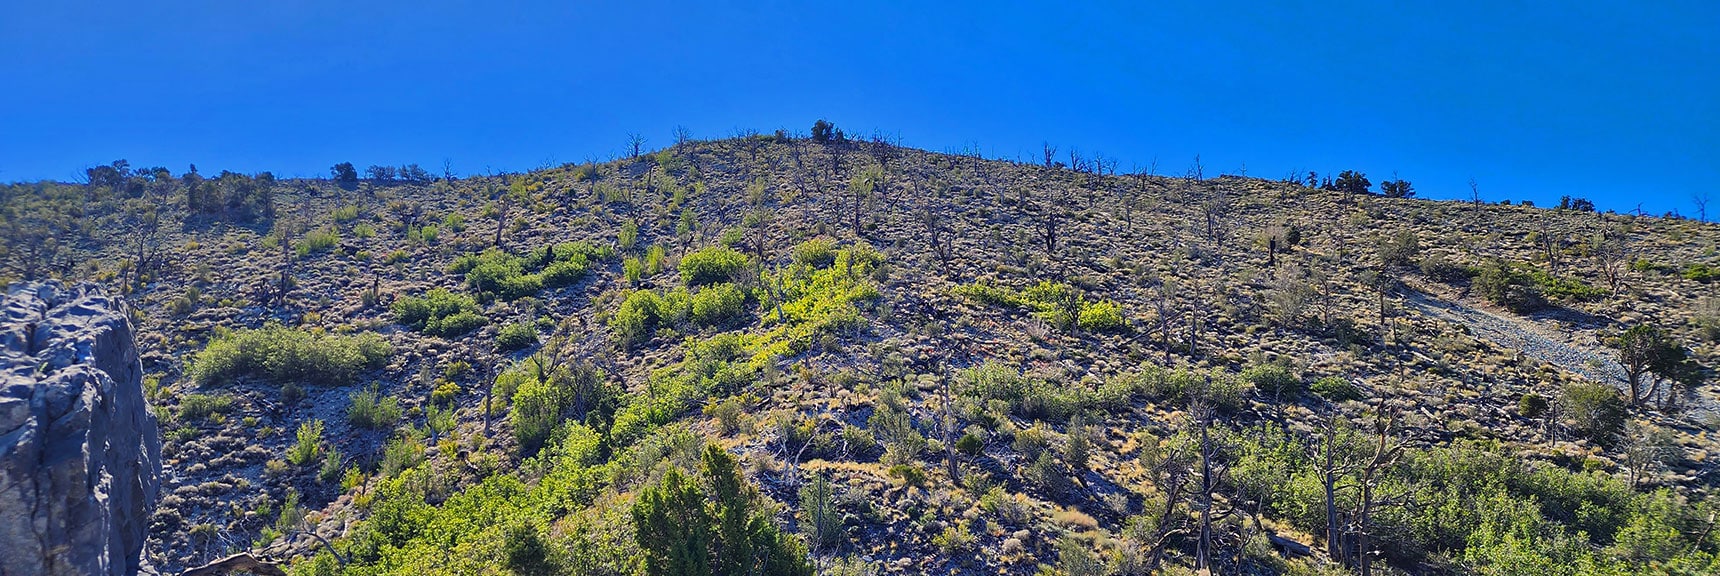 Burnt Peak | La Madre Mountains Wilderness, Nevada | Overview